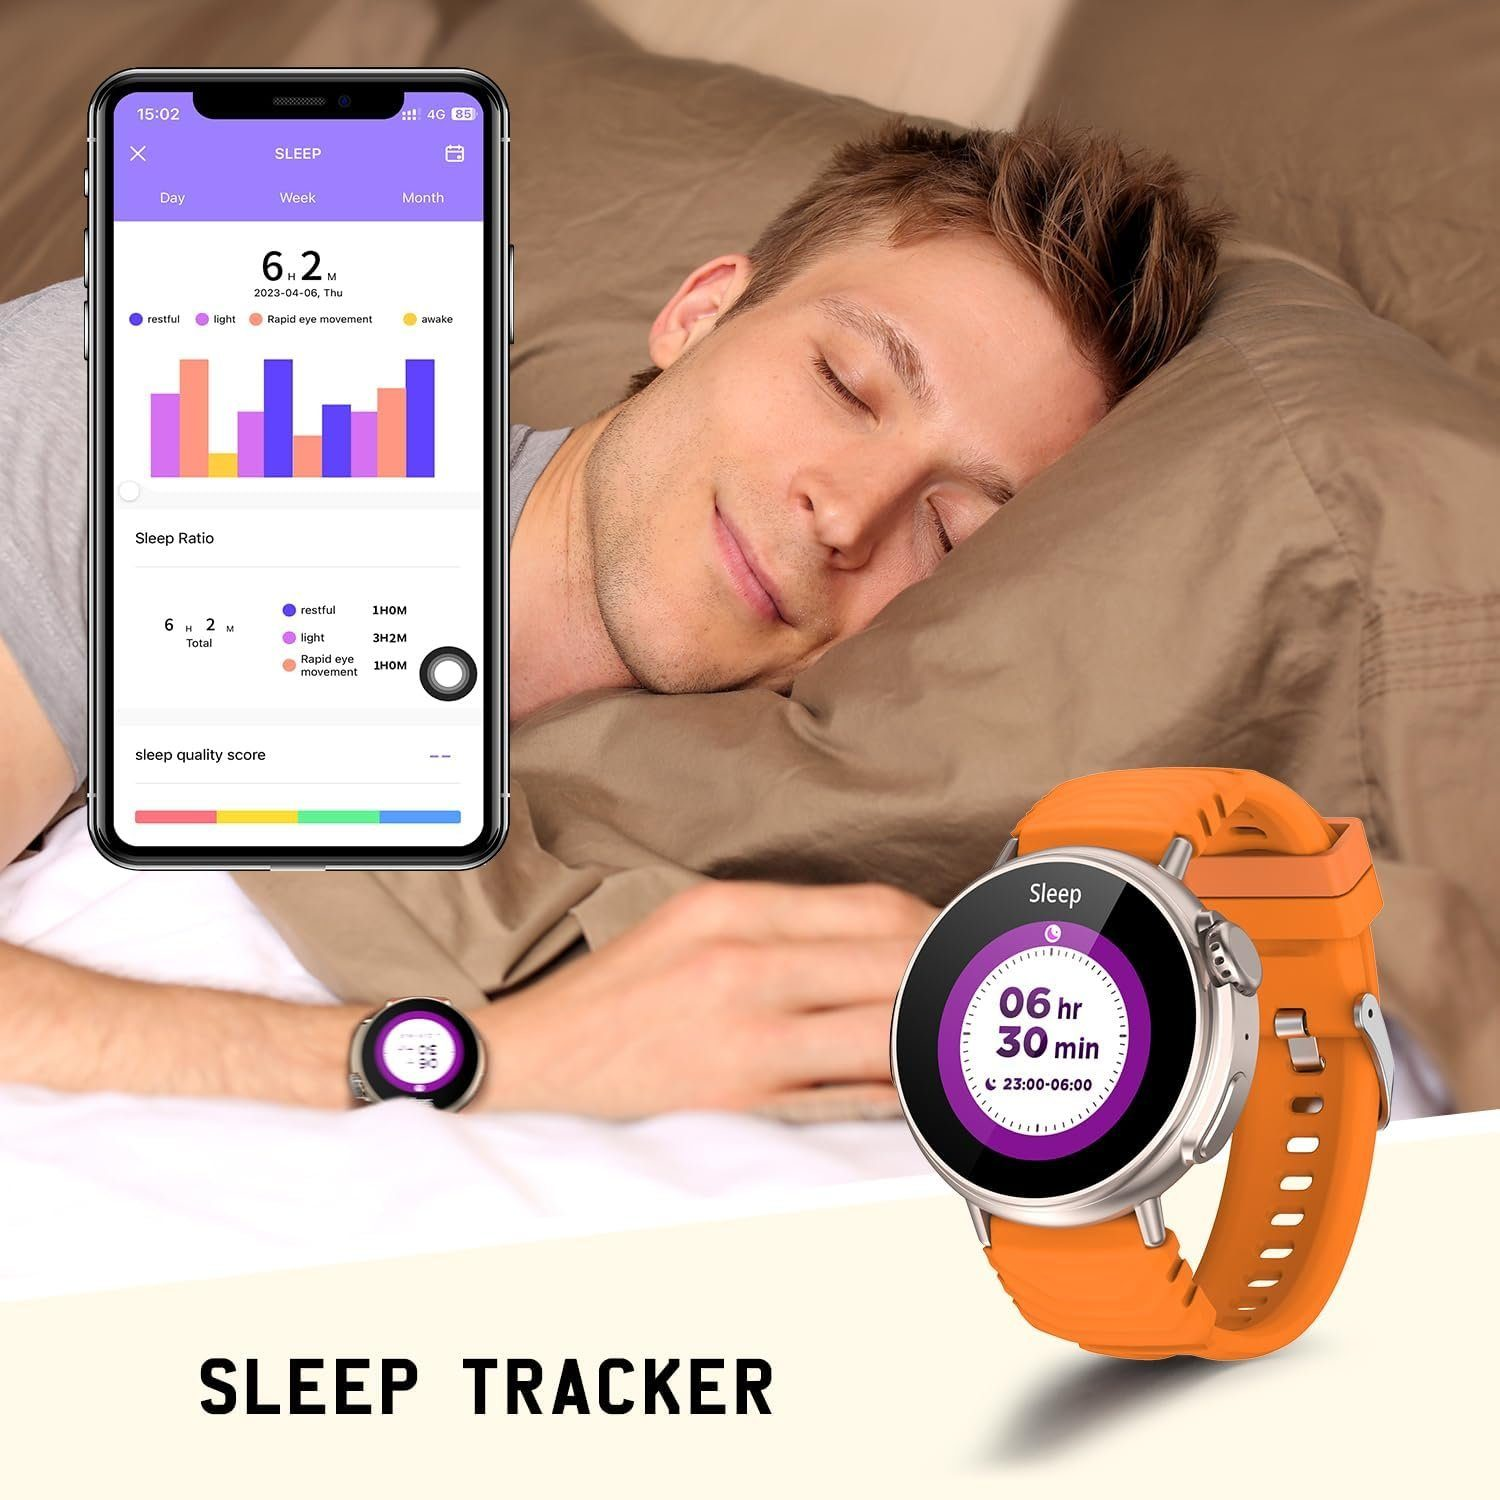 AMSTA Ultra sportuhr Fitness Uhr Armbanduhr Smartwatch Legierung 1x Orange Armbänd Silikon